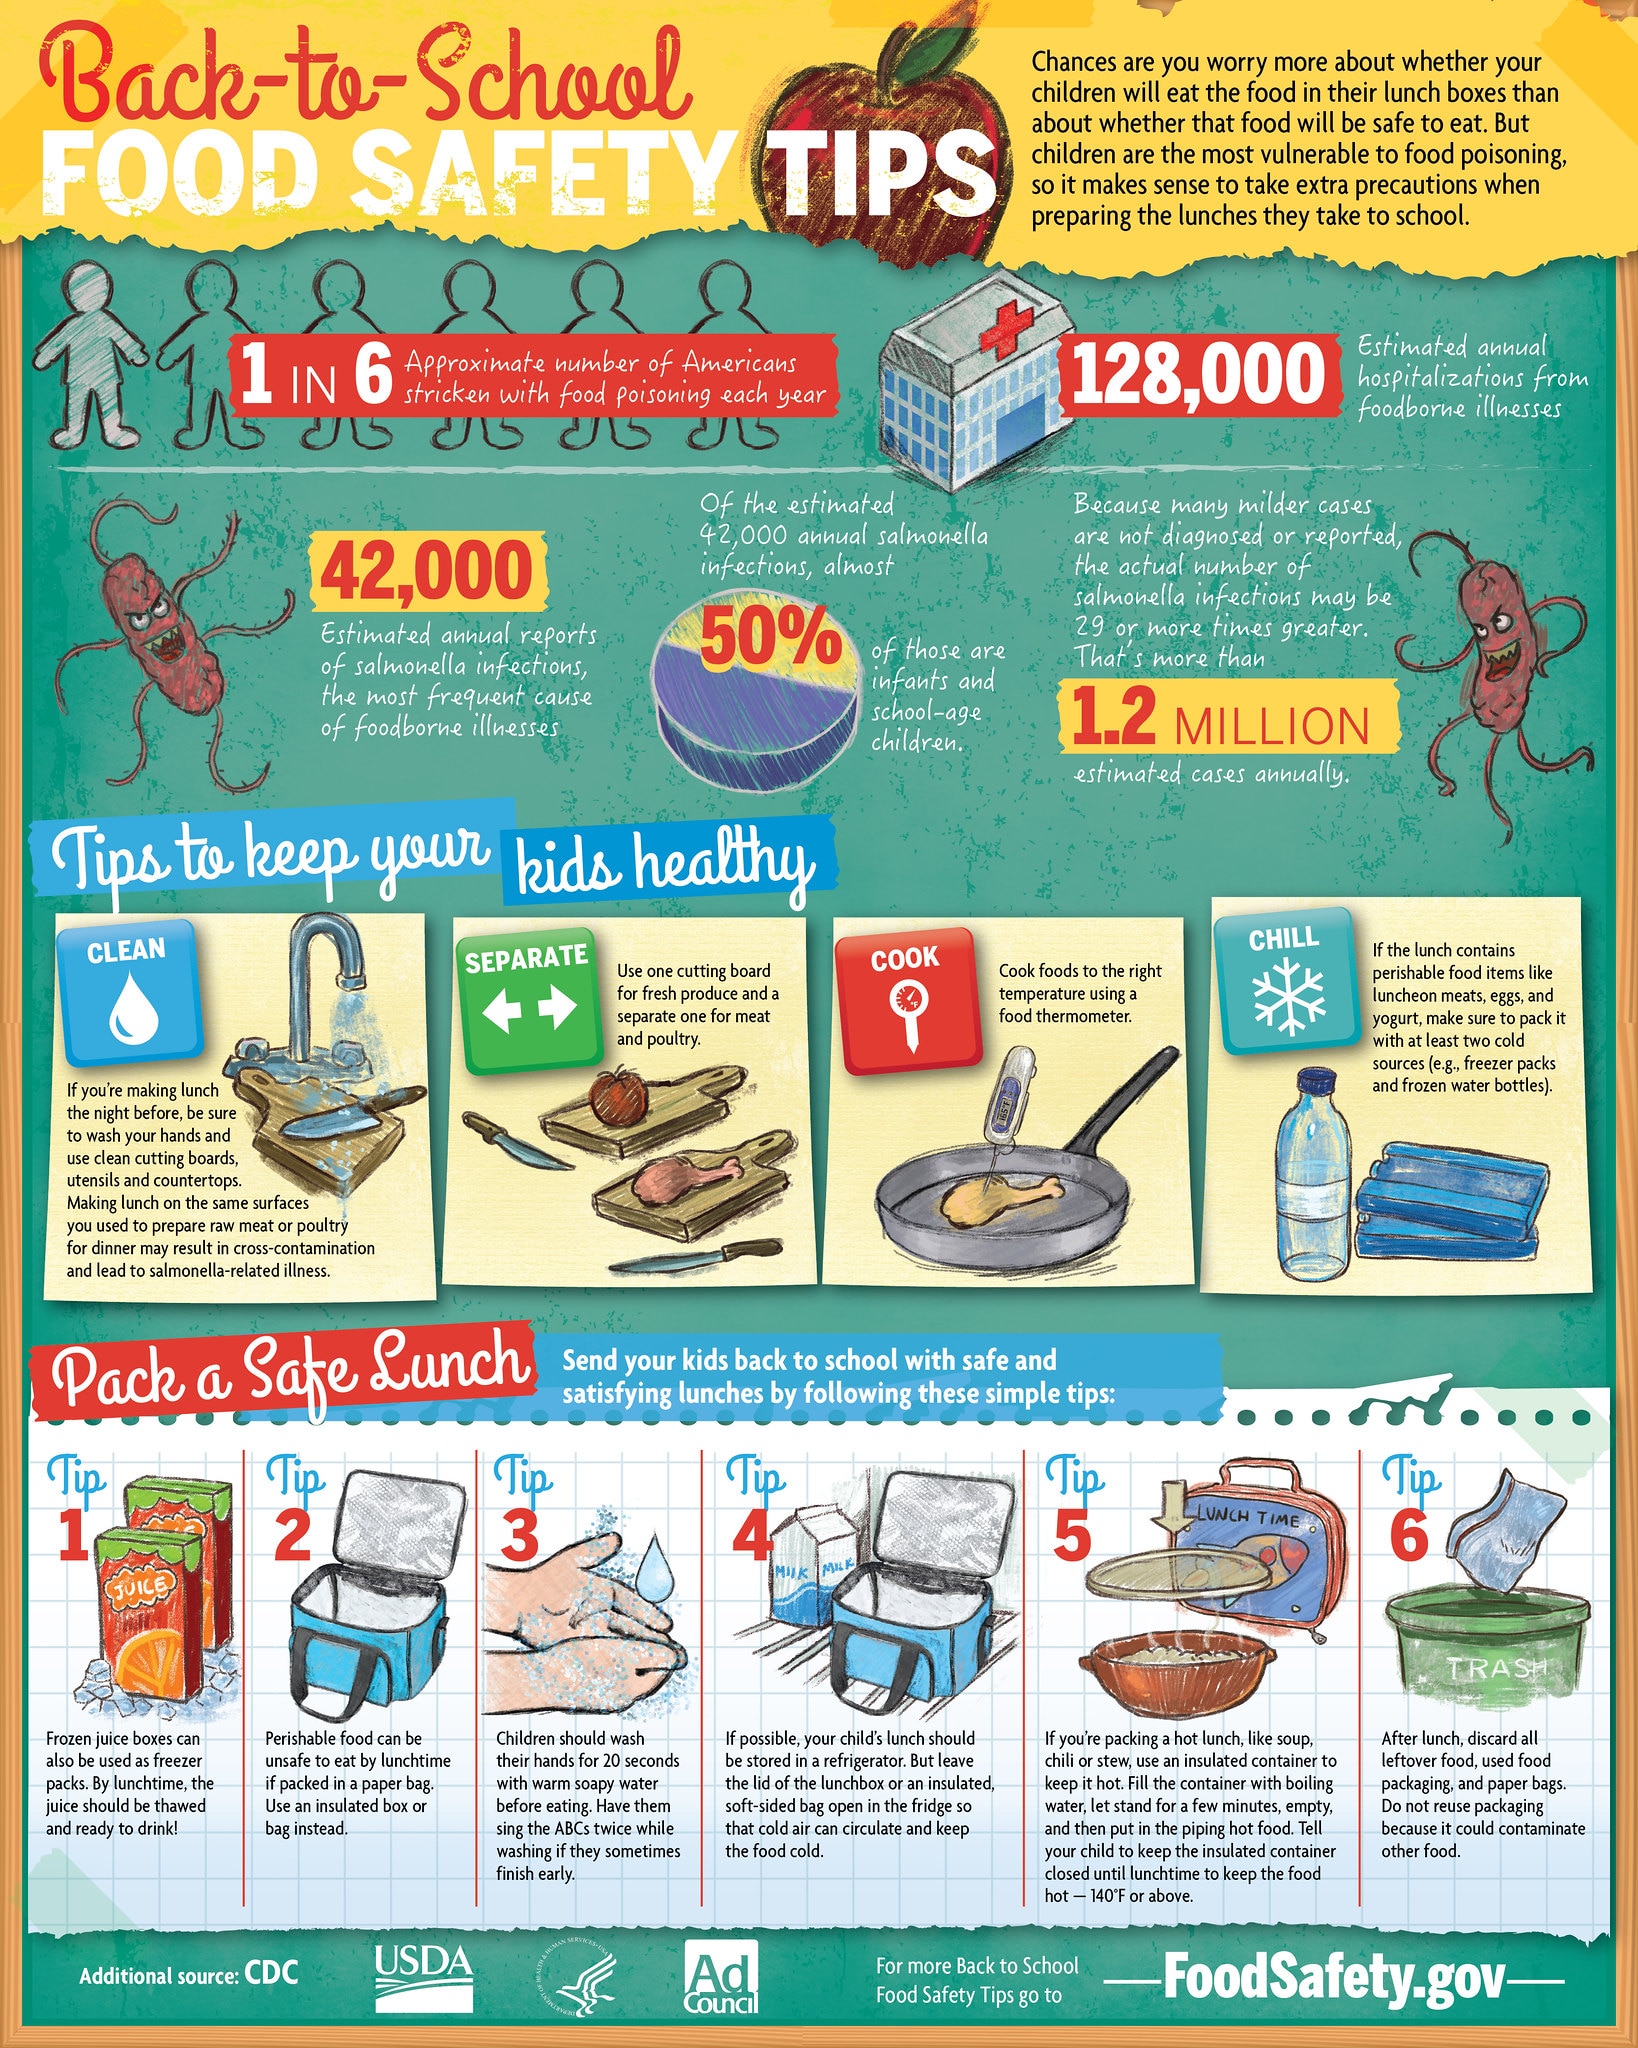 https://www.foodsafety.gov/sites/default/files/2019-05/back-to-school-food-safety-infographic.jpg